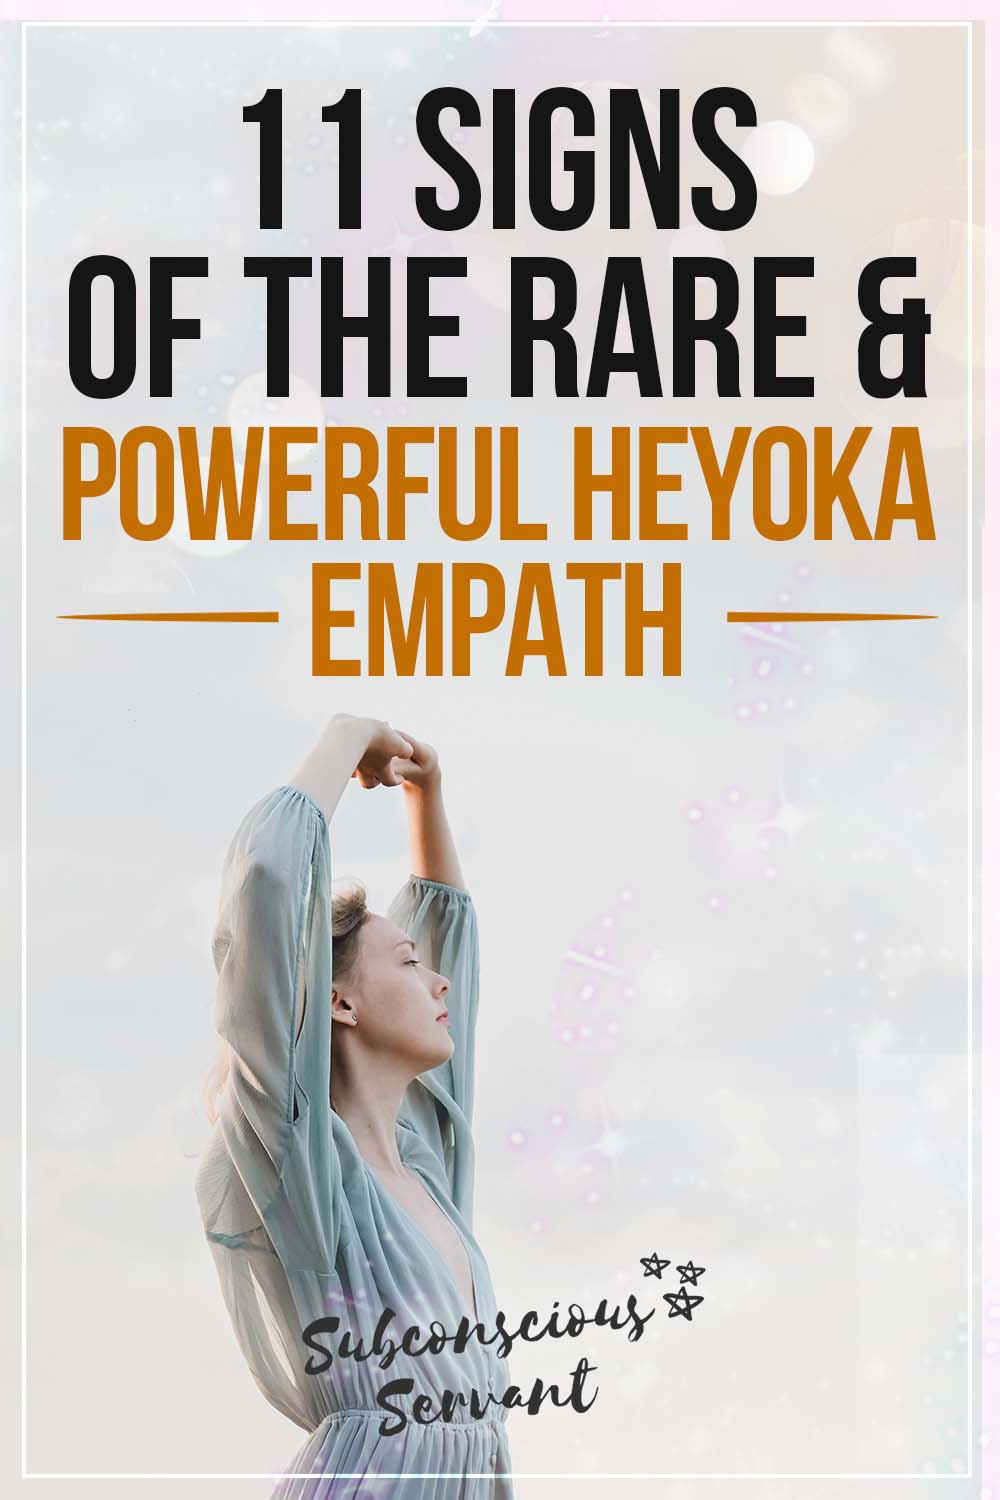 Heyoka Empath - 11 Signs You Are This Powerful & Rare Kind Of Empath